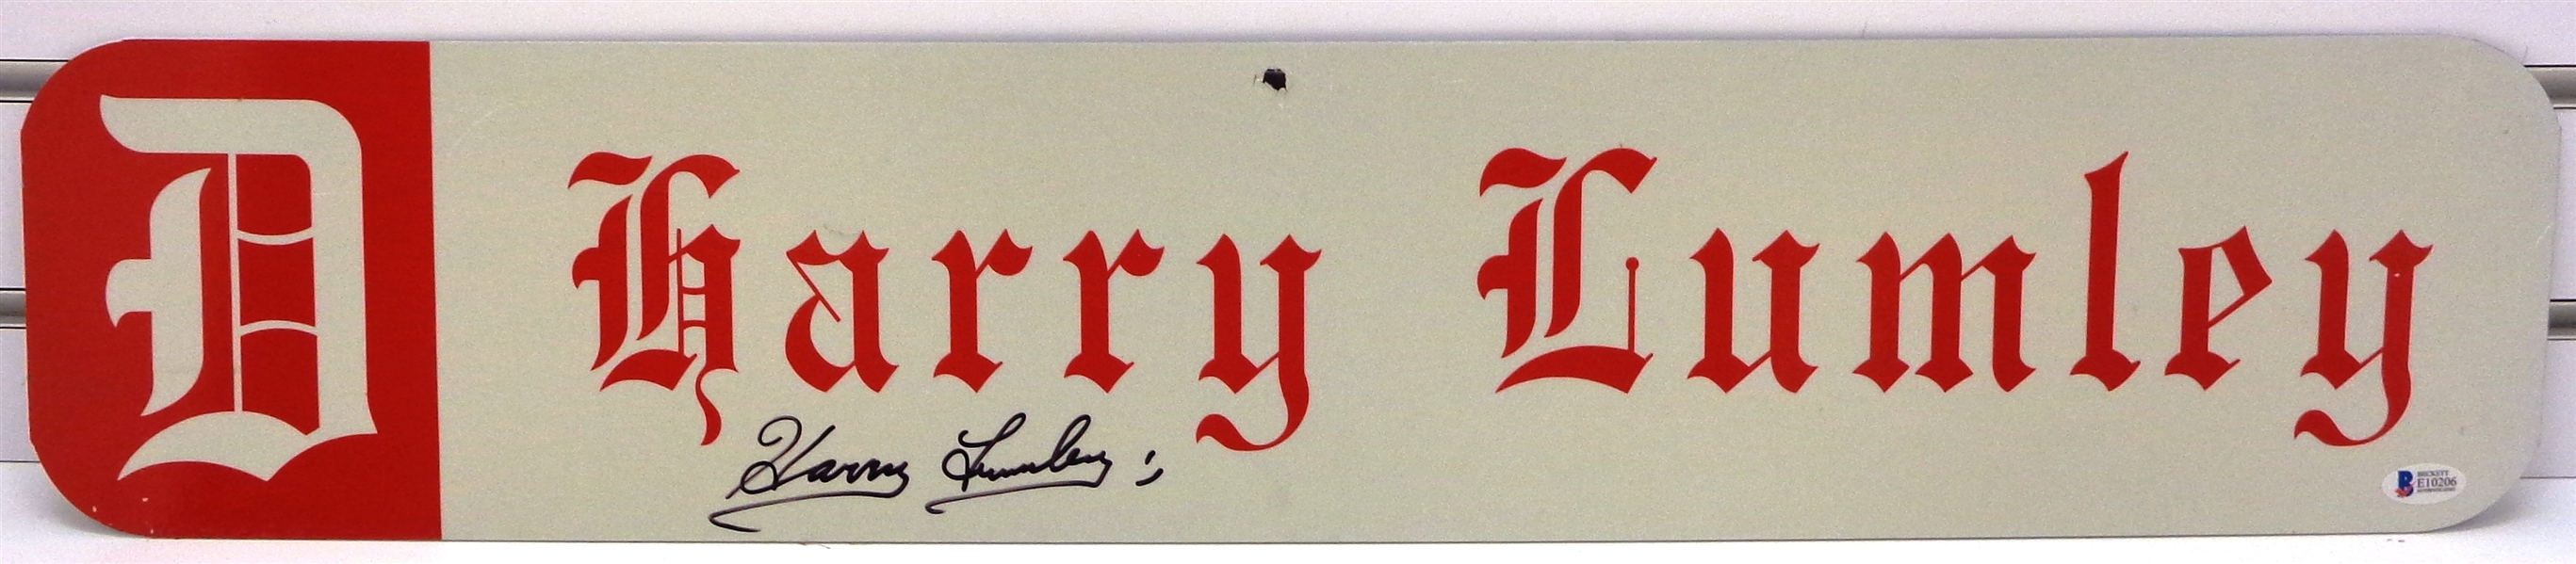 Harry Lumley Autographed 6x30 Custom Street Sign